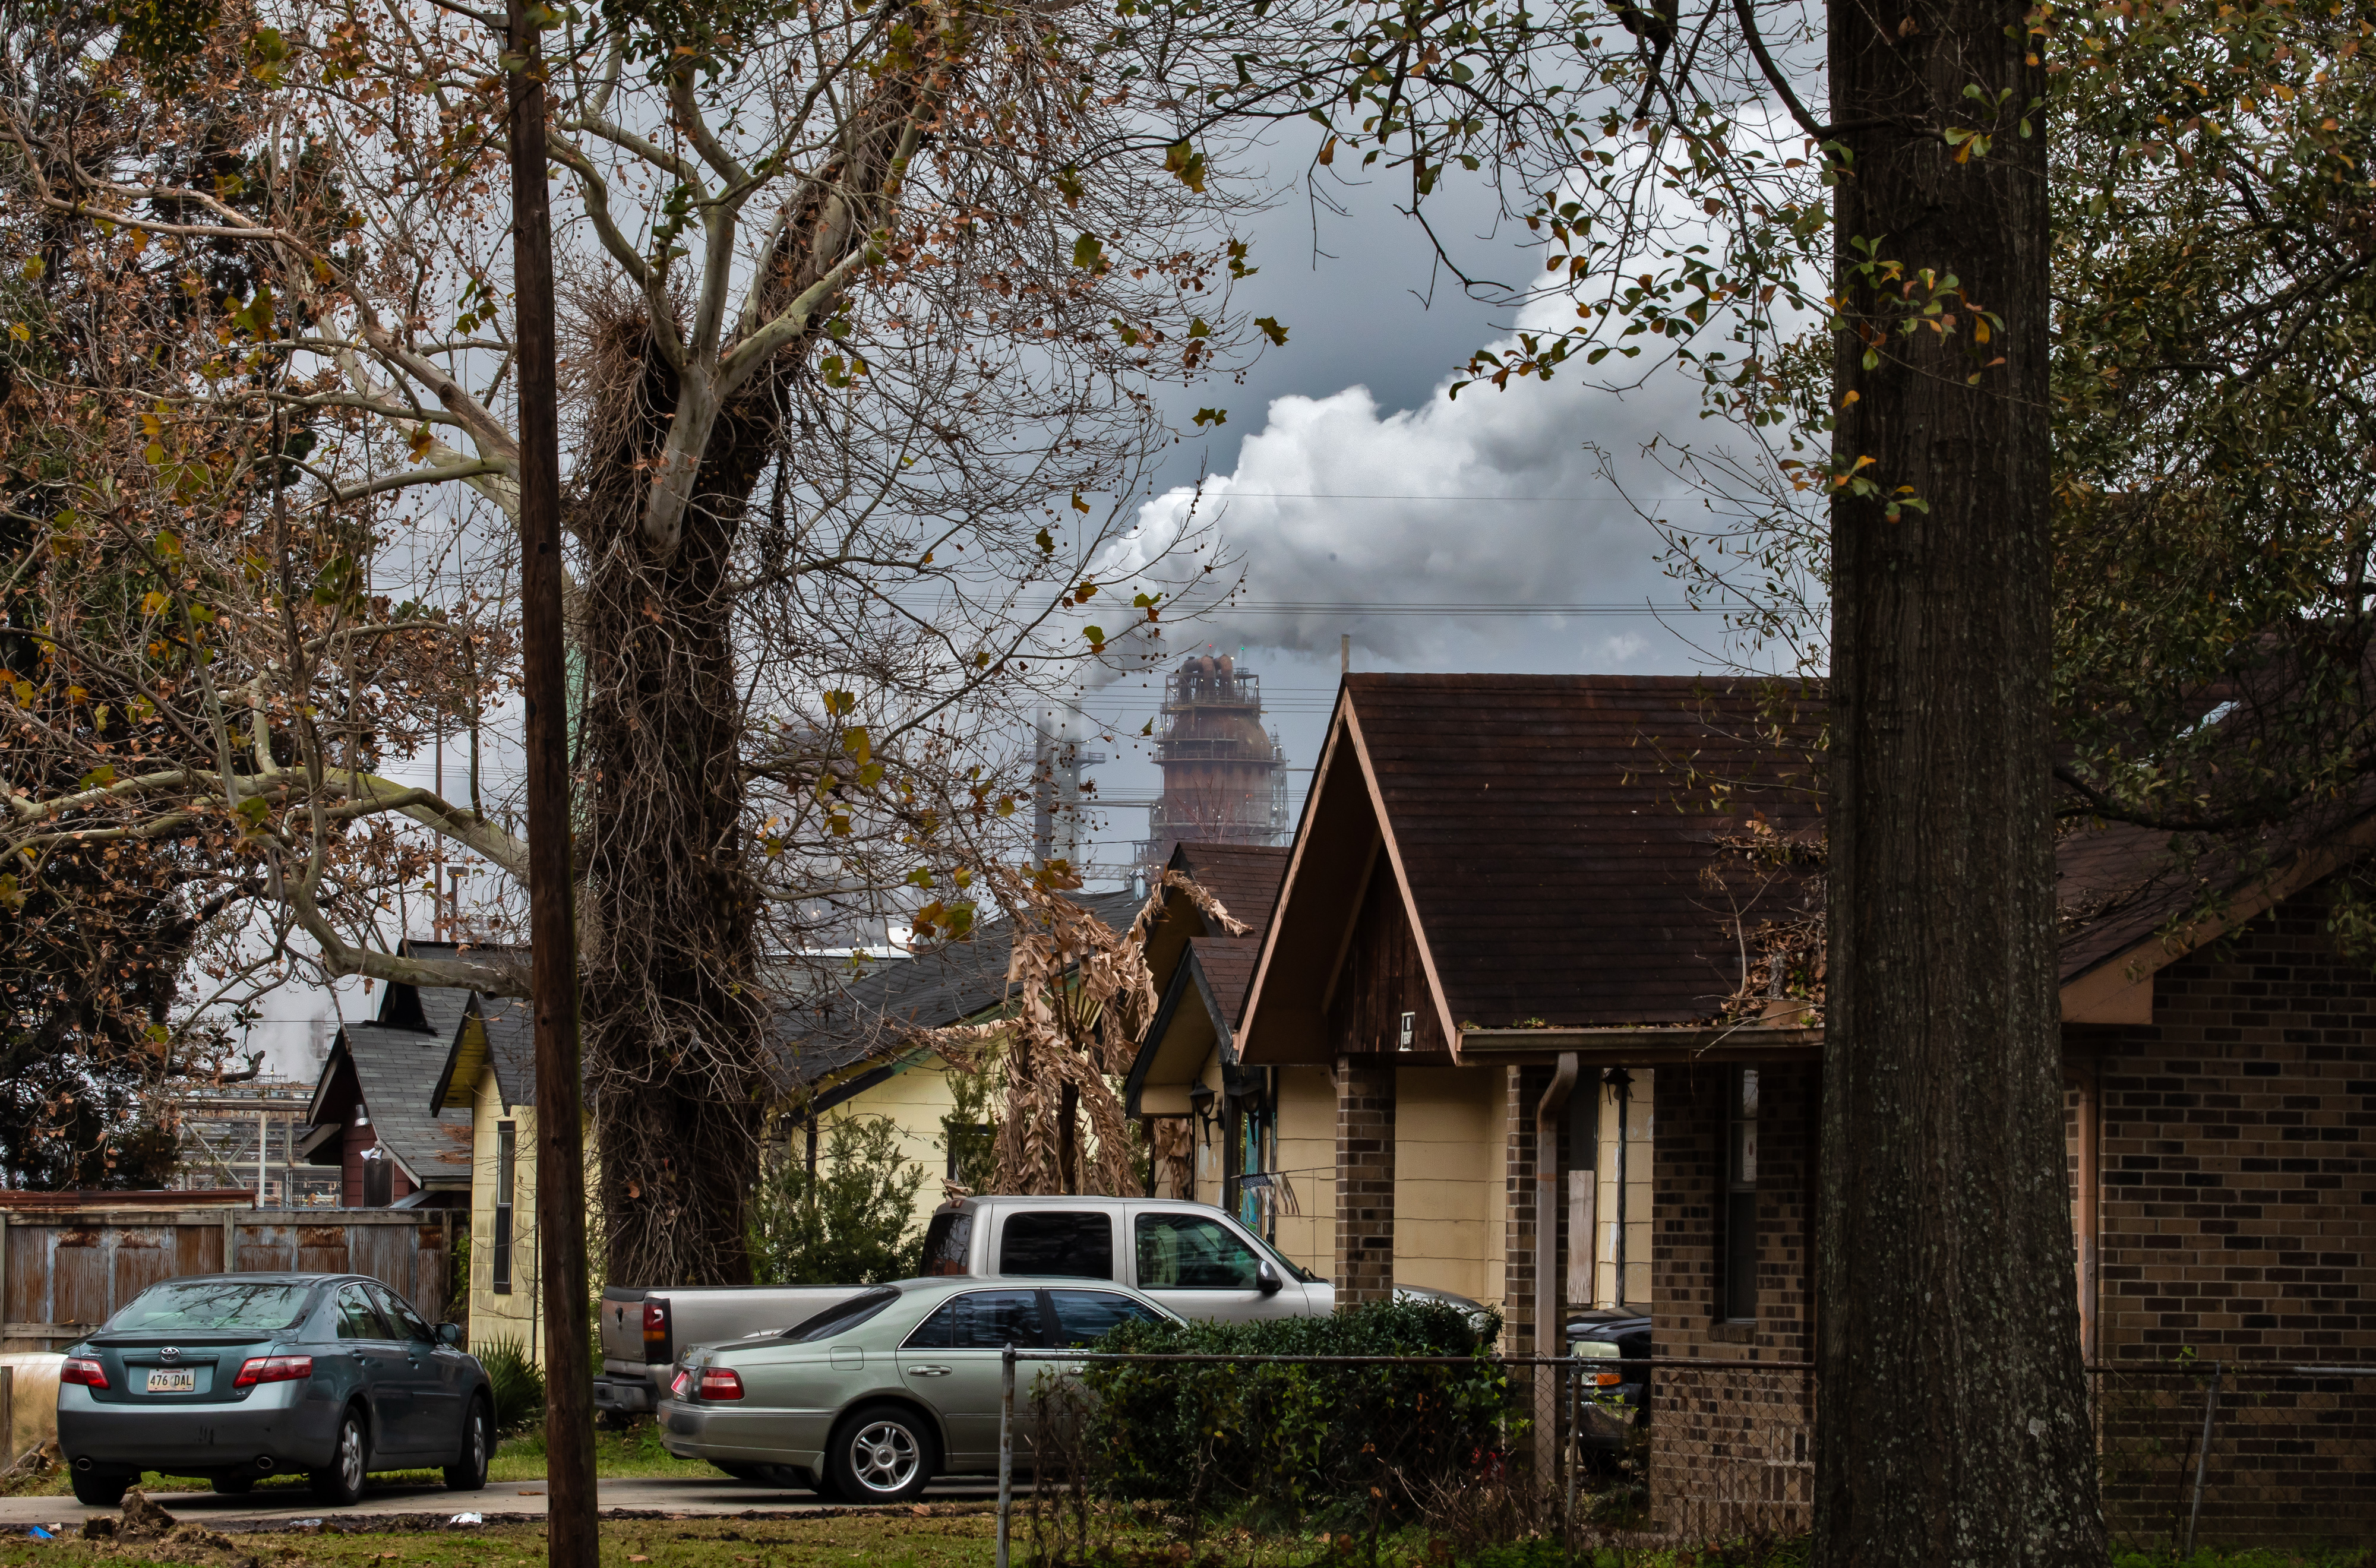 Exxon's Baton Rouge Refinery in Louisiana's 'Cancer Alley' - Photographer Julie Dermansky